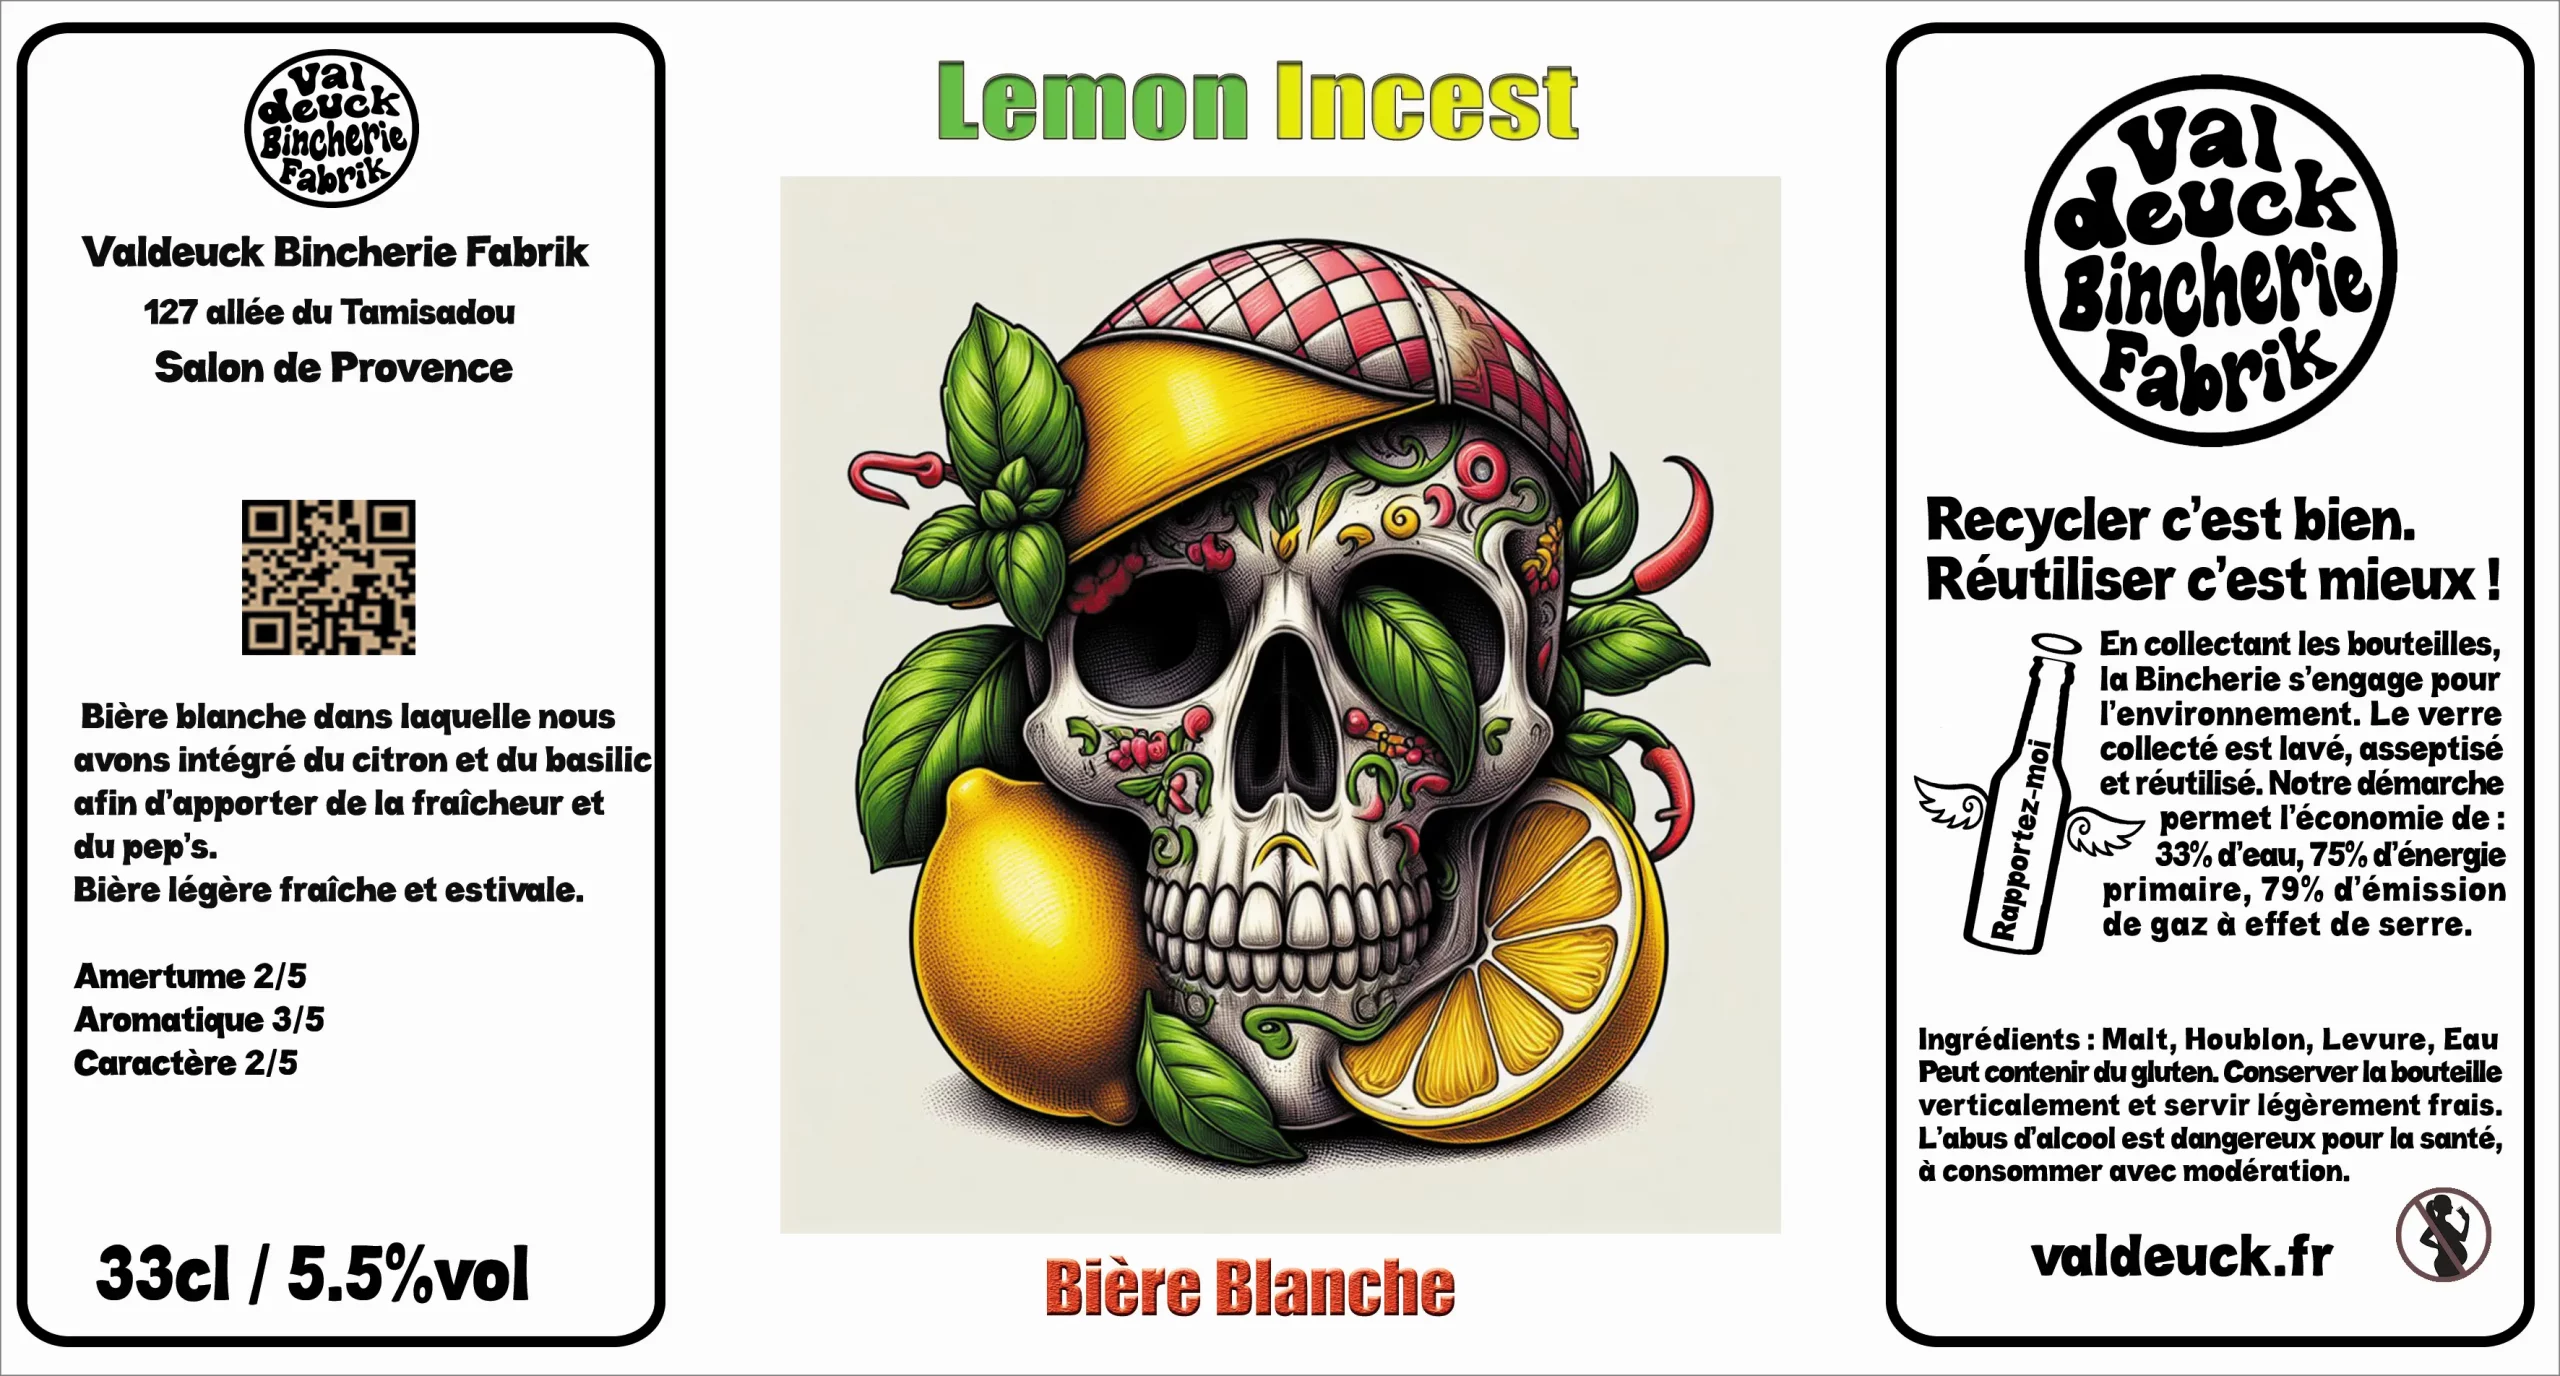 Lemon Incest (33cl) valdeuck bincherie fabrik salon de provence